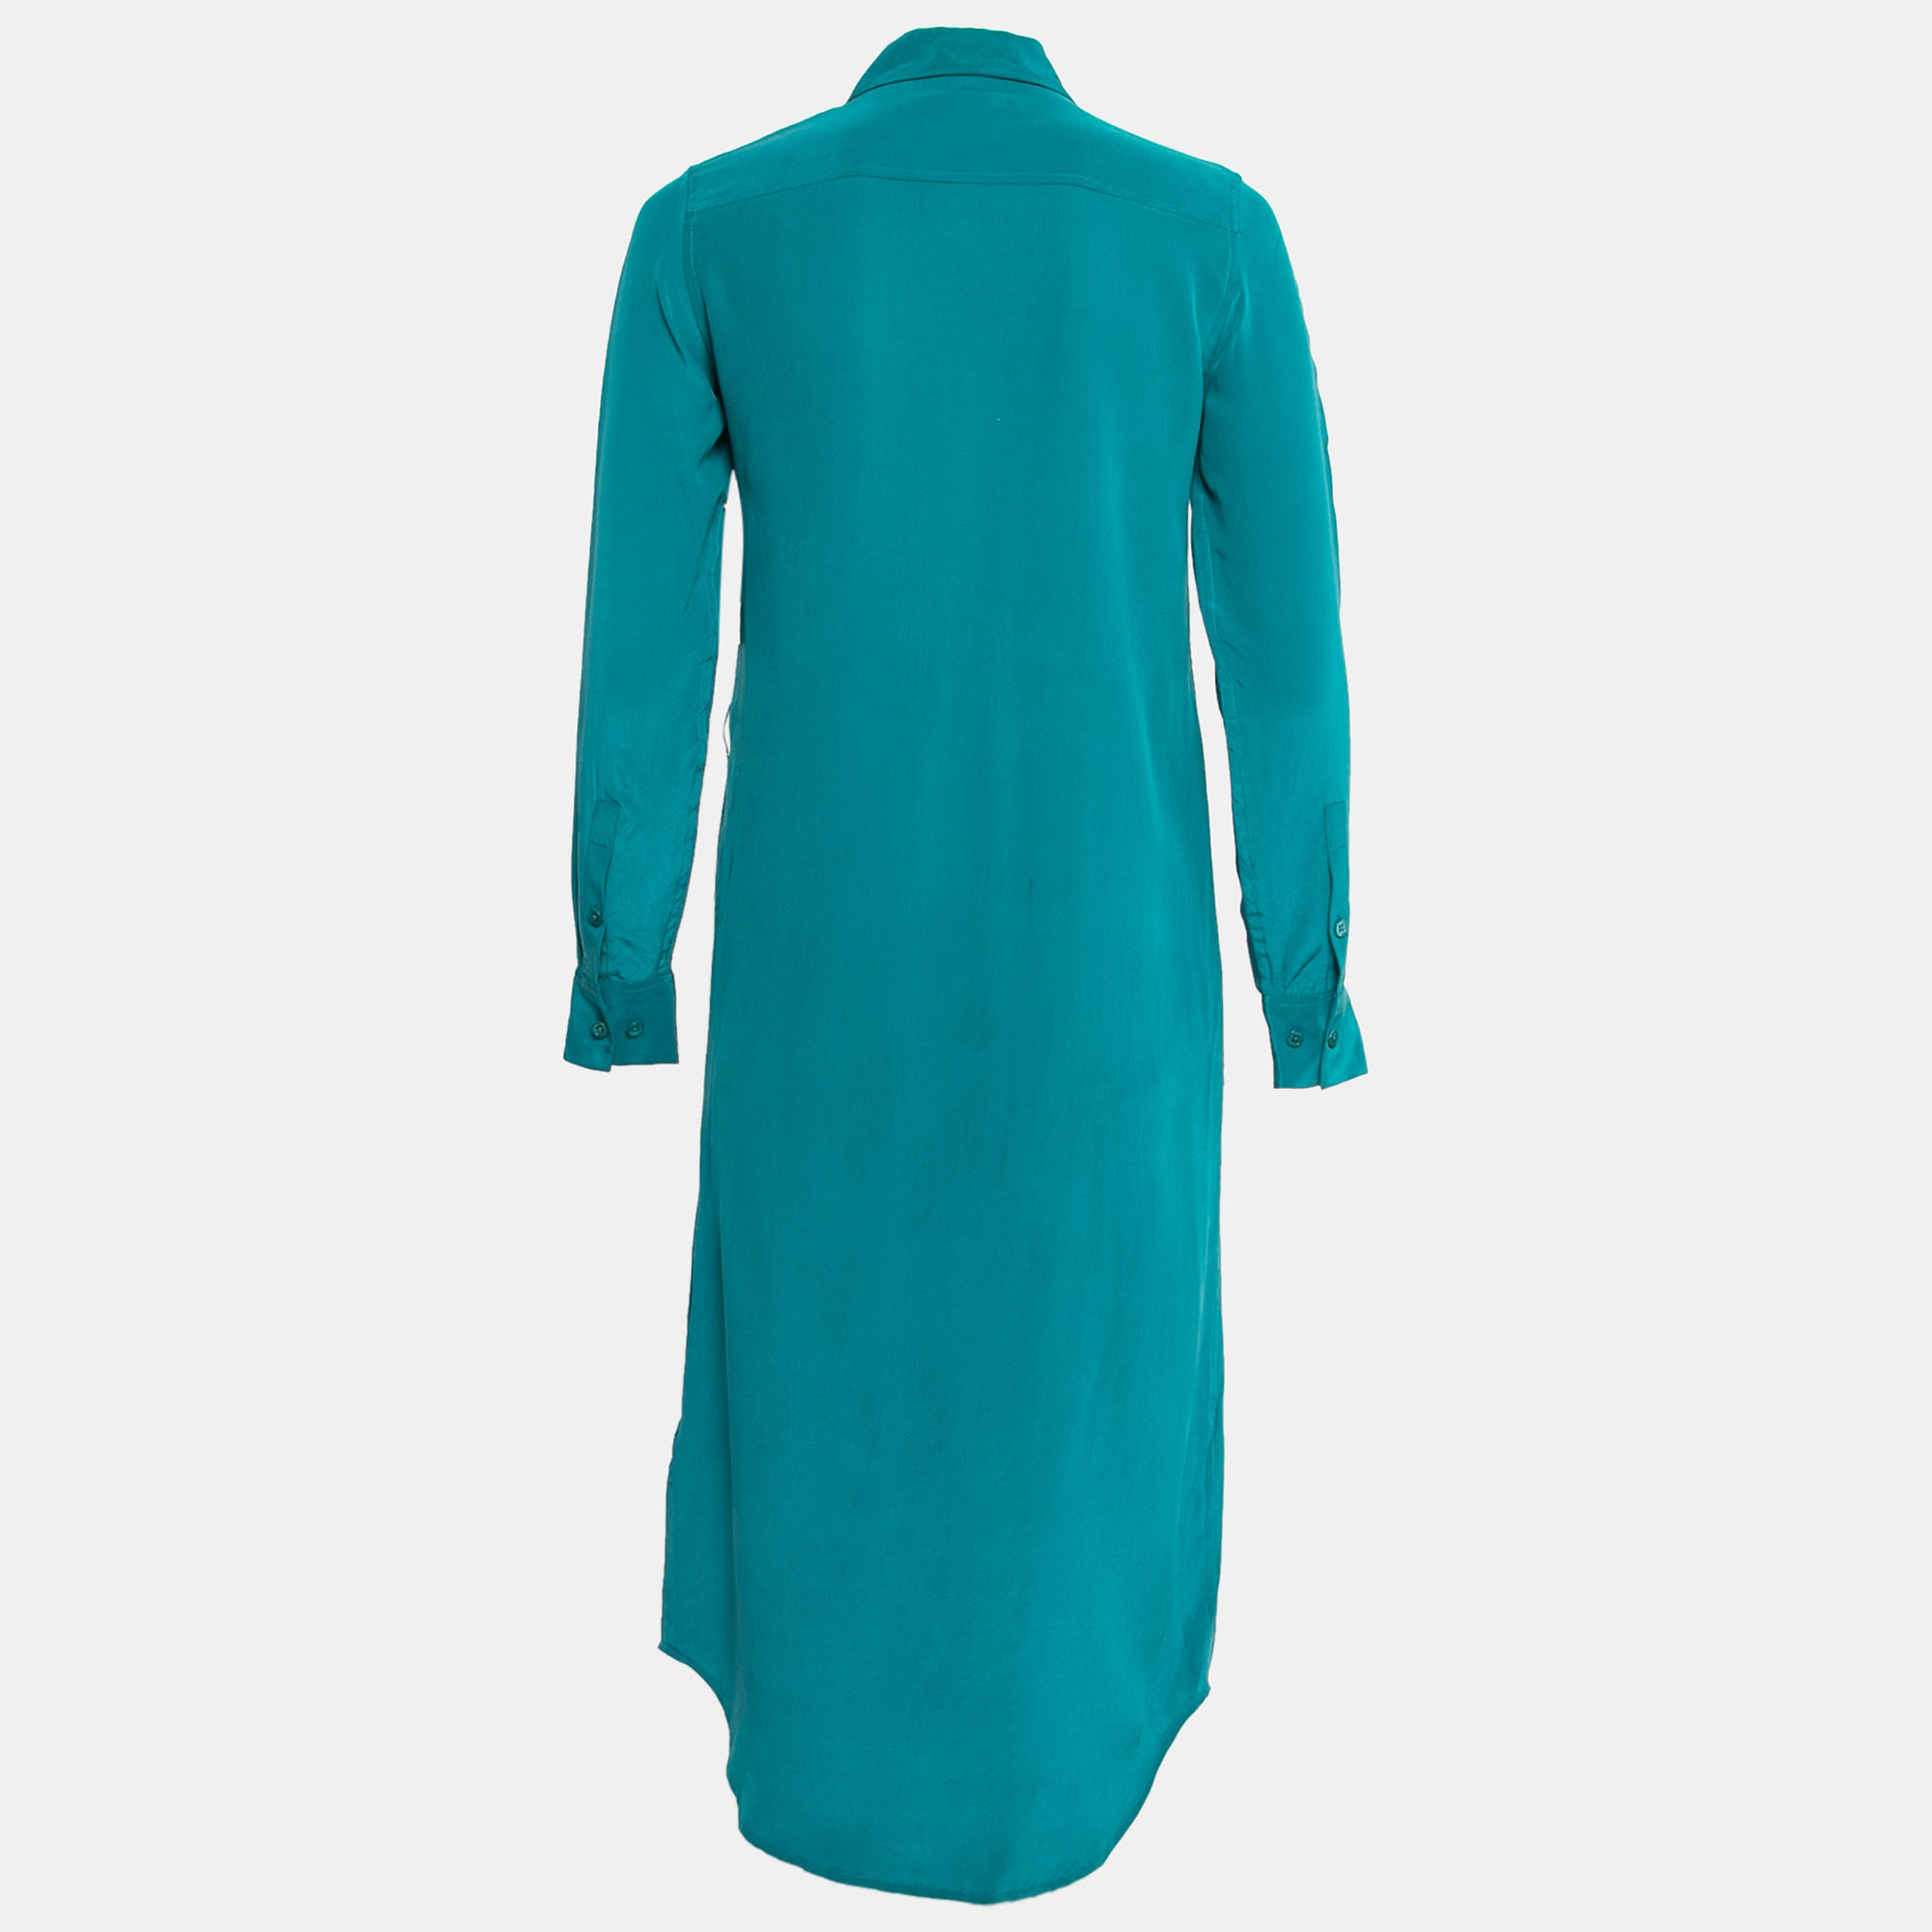 Equipment Femme Everglade Blue Silk Charmeuse Tegan Shirt Dress XS